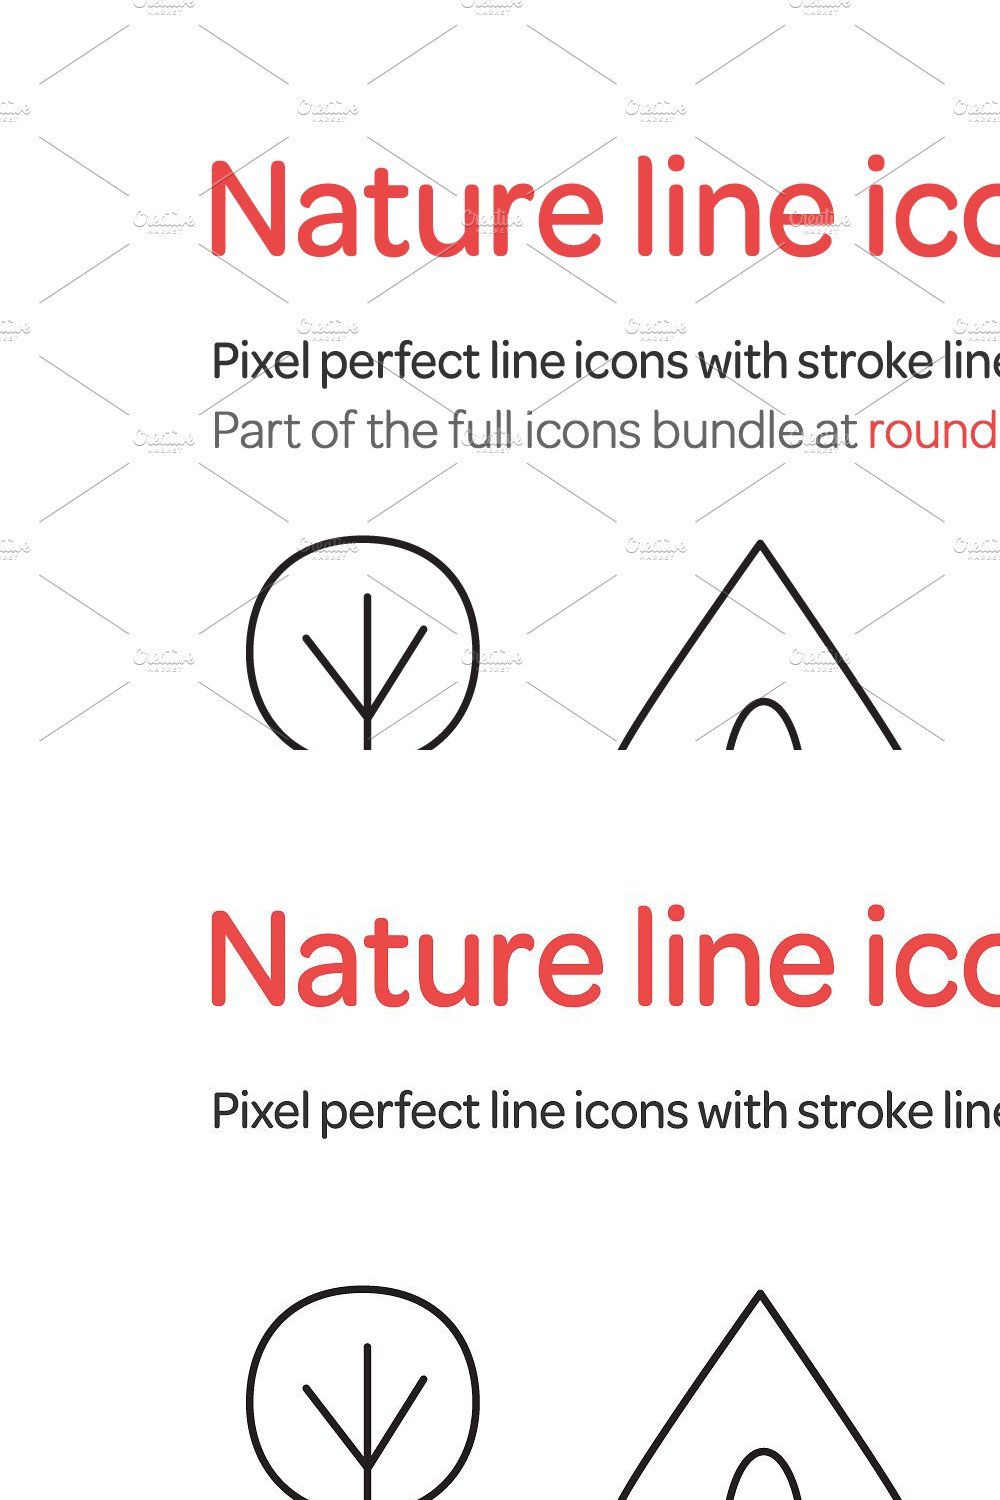 Nature Line Icons Set pinterest preview image.